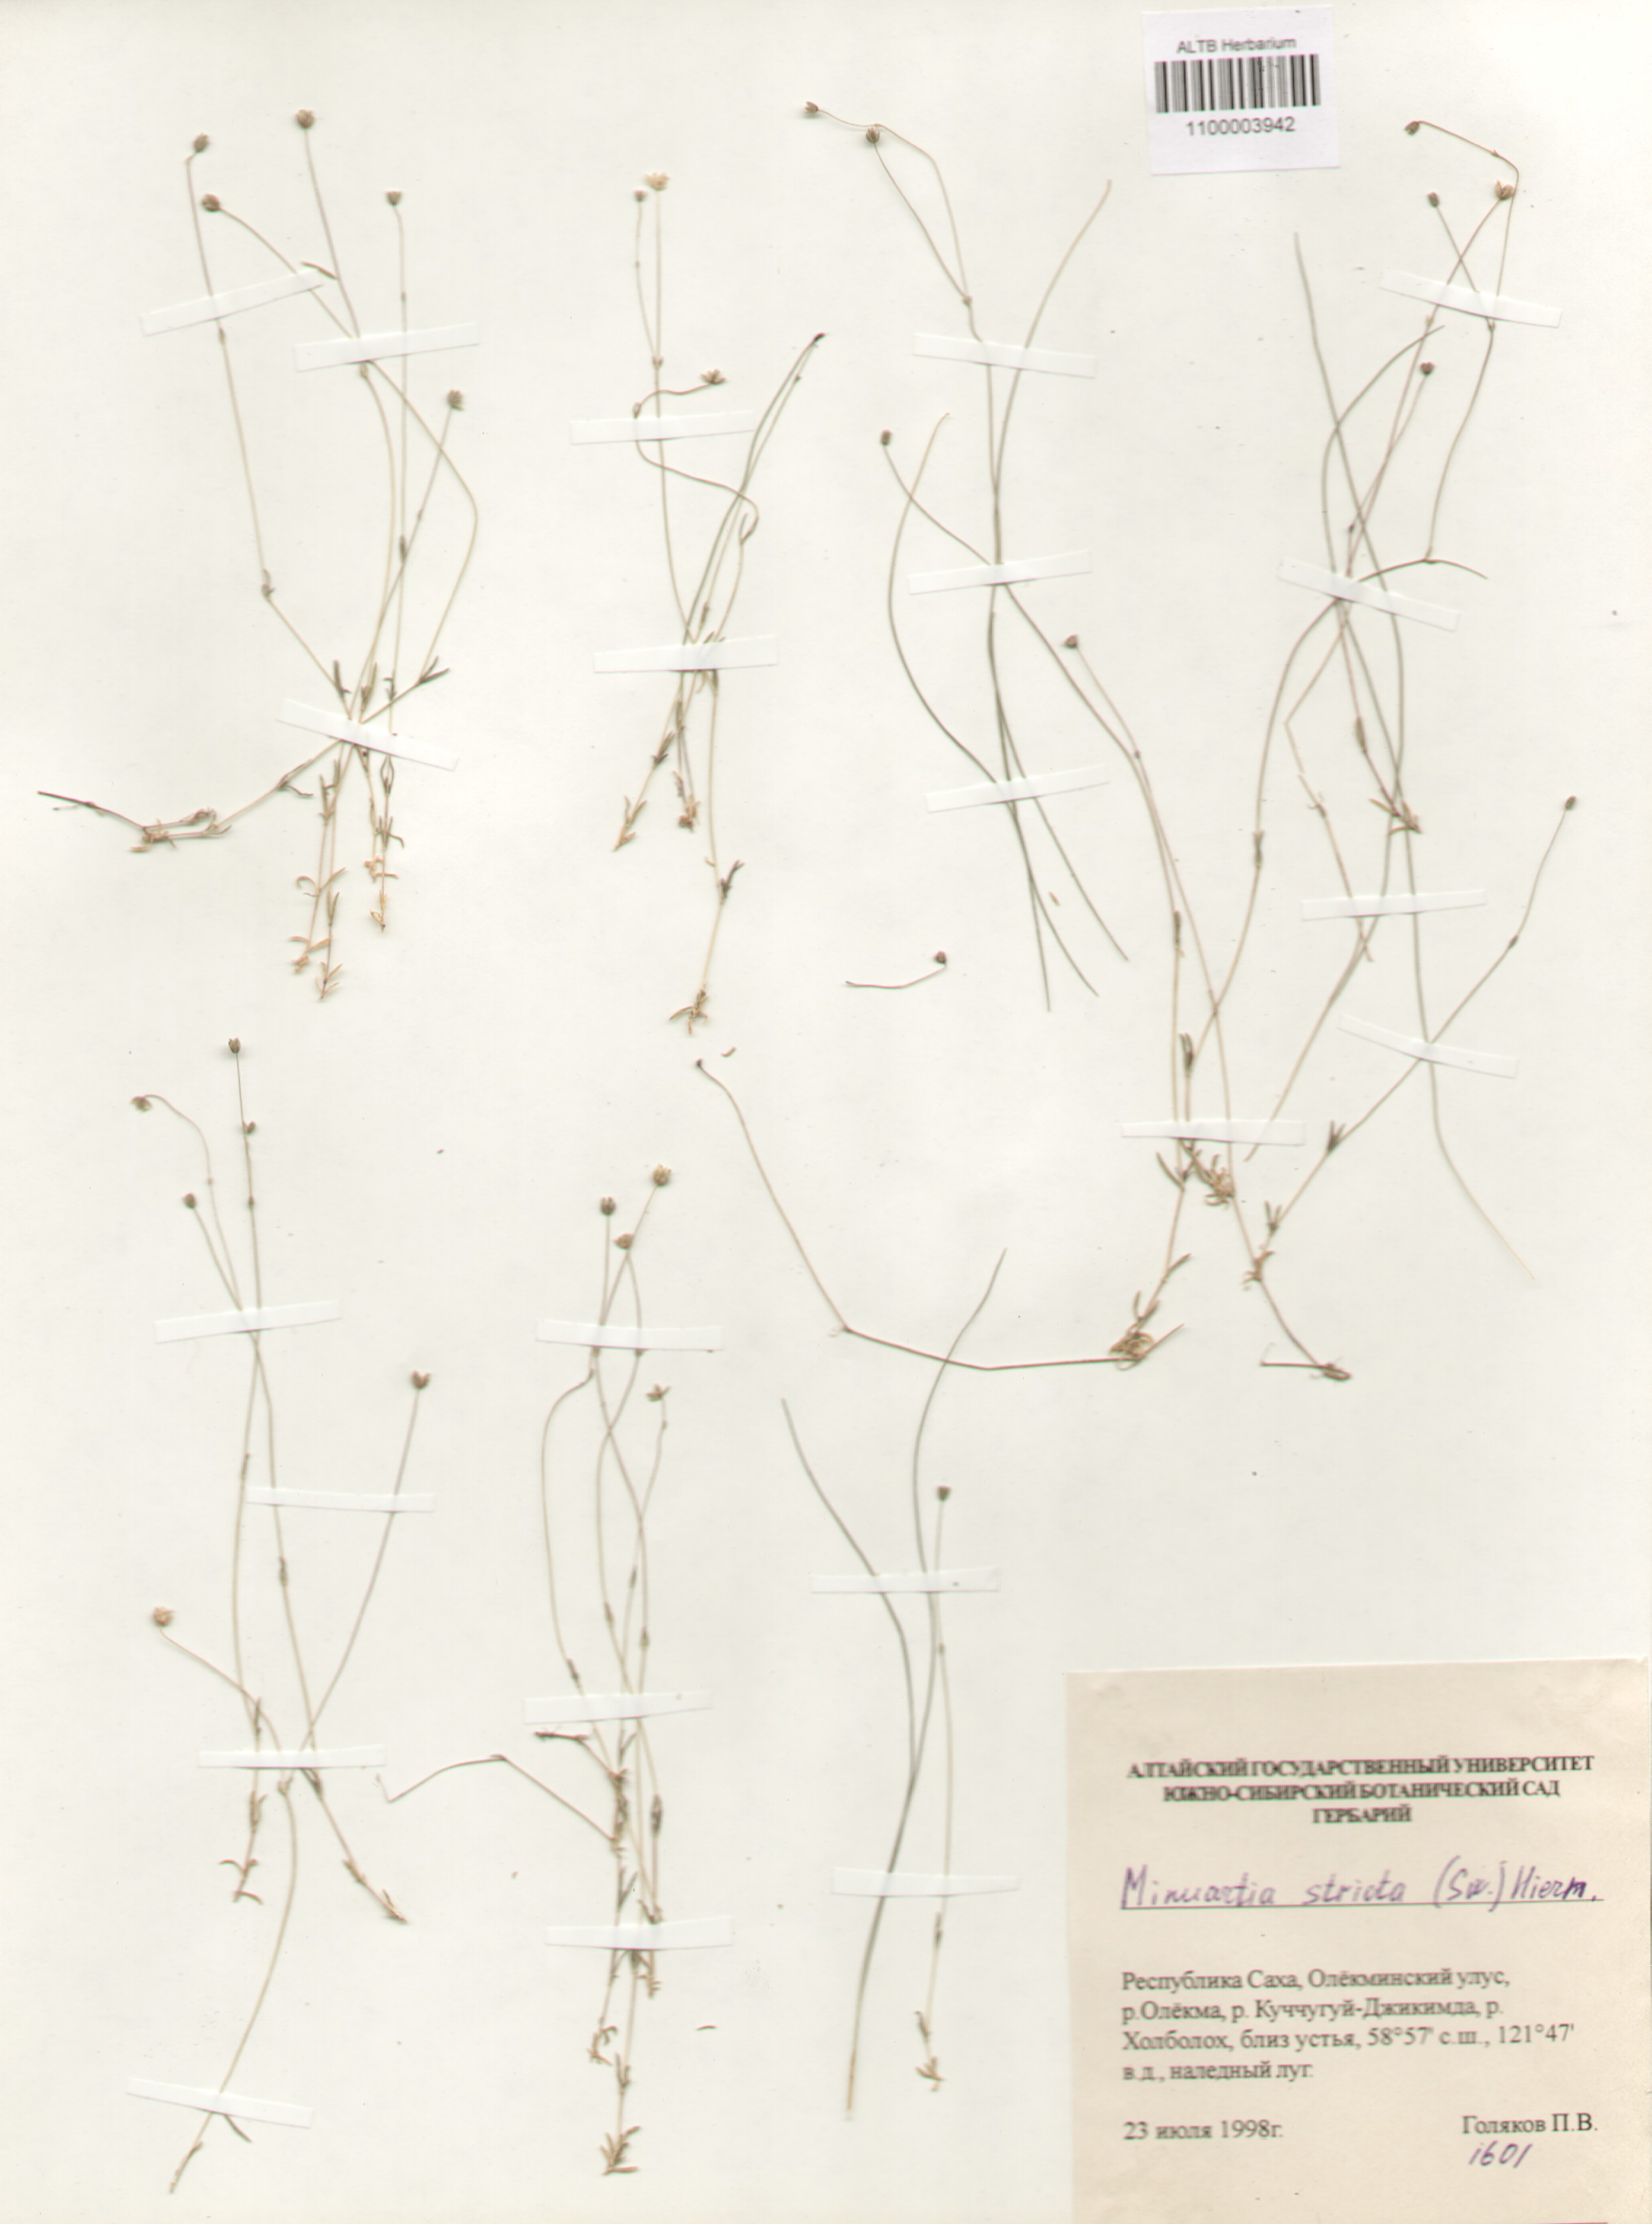 Caryophyllaceae,Minuartia stricta (Sw.) Hiern.